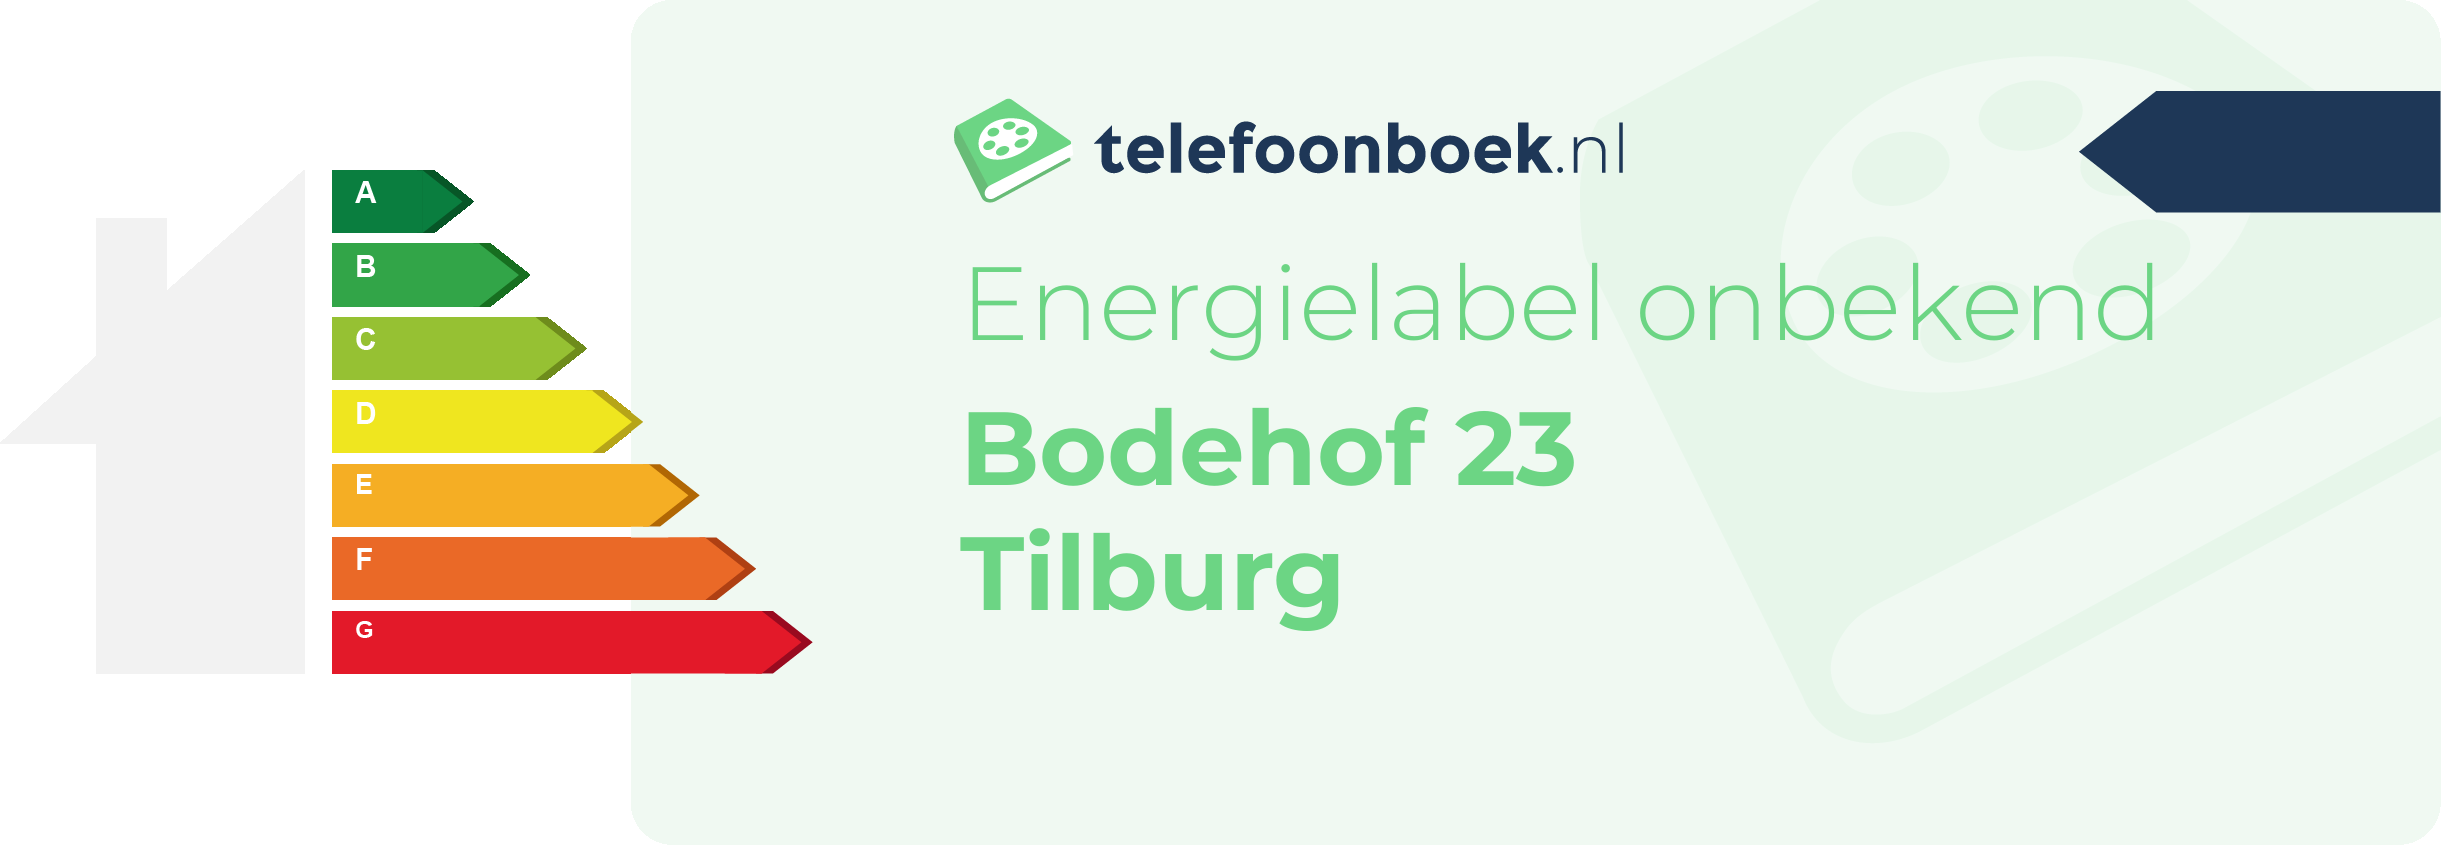 Energielabel Bodehof 23 Tilburg